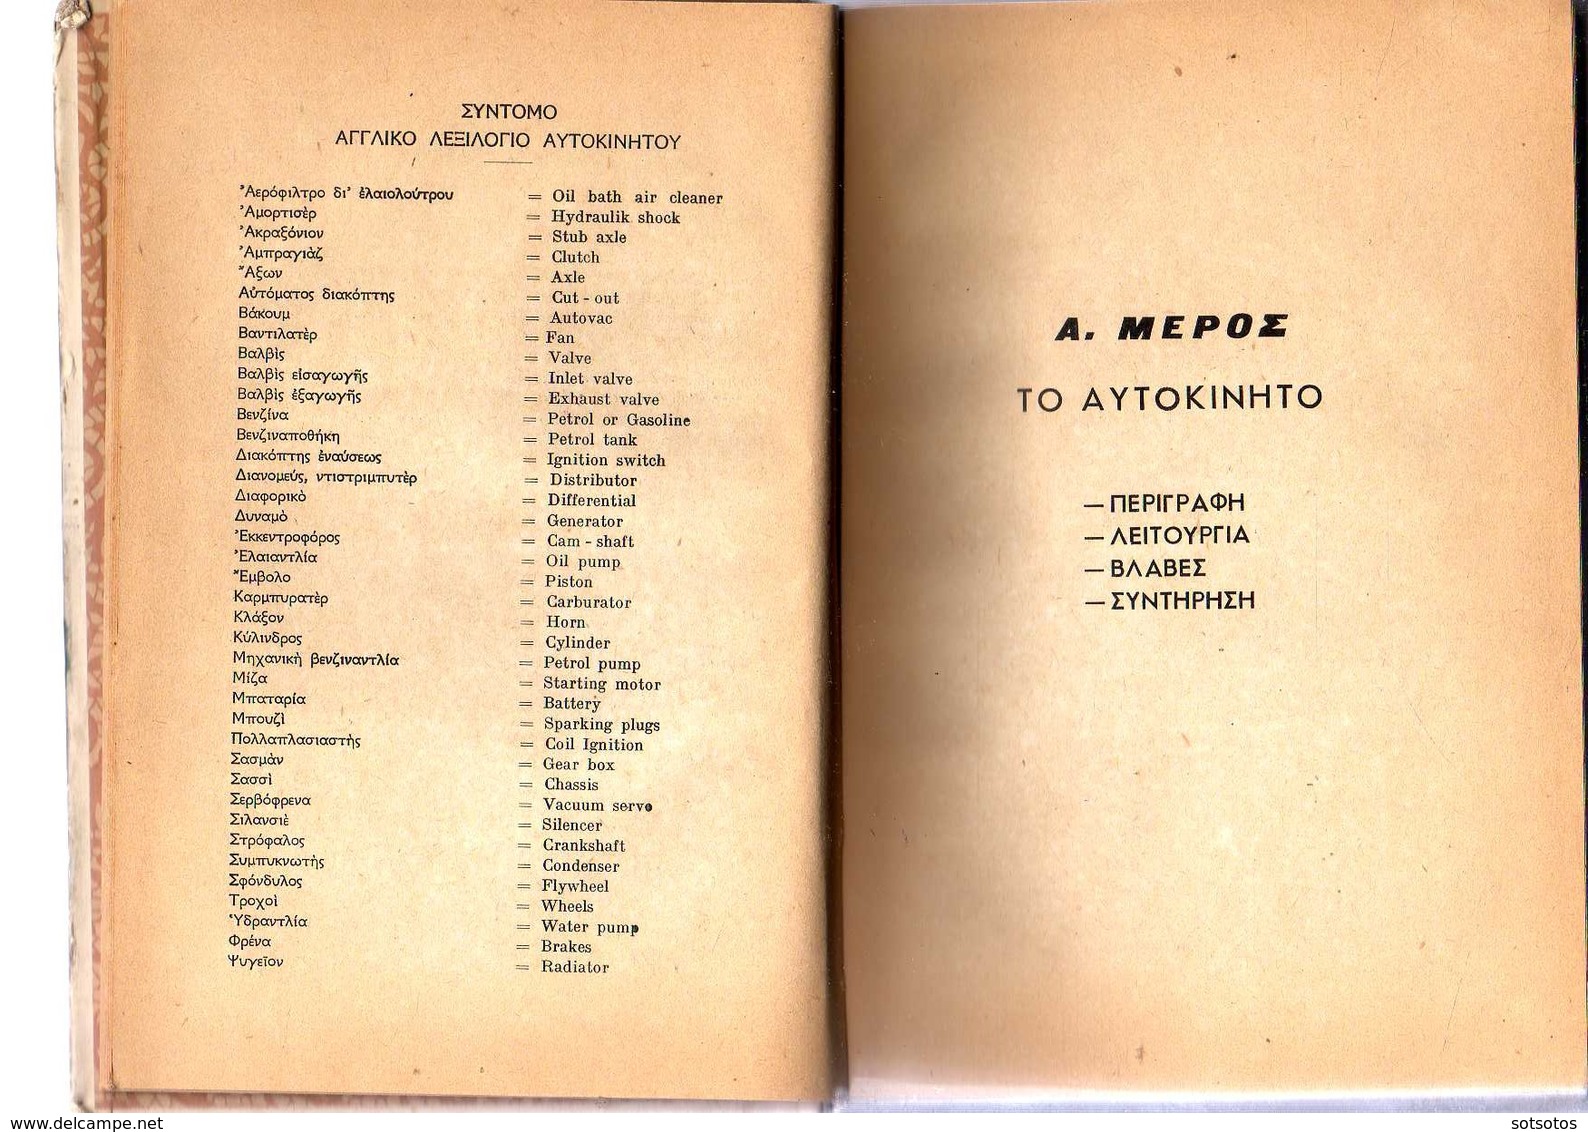 GREEK BOOK: Το ΒΙΒΛΙΟ του ΟΔΗΓΟΥ-ΜΗΧΑΝΙΚΟΥ ΑΥΤΟΚΙΝΗΤΩΝ: Κ. ΒΑΡΔΑΚΟΥ Έκδ. ΠΑΠΑΔΗΜΗΤΡΟΠΟΥΛΟΥ (1957) με 272 ΣΕΛΙΔΕΣ και ΠΟΛ